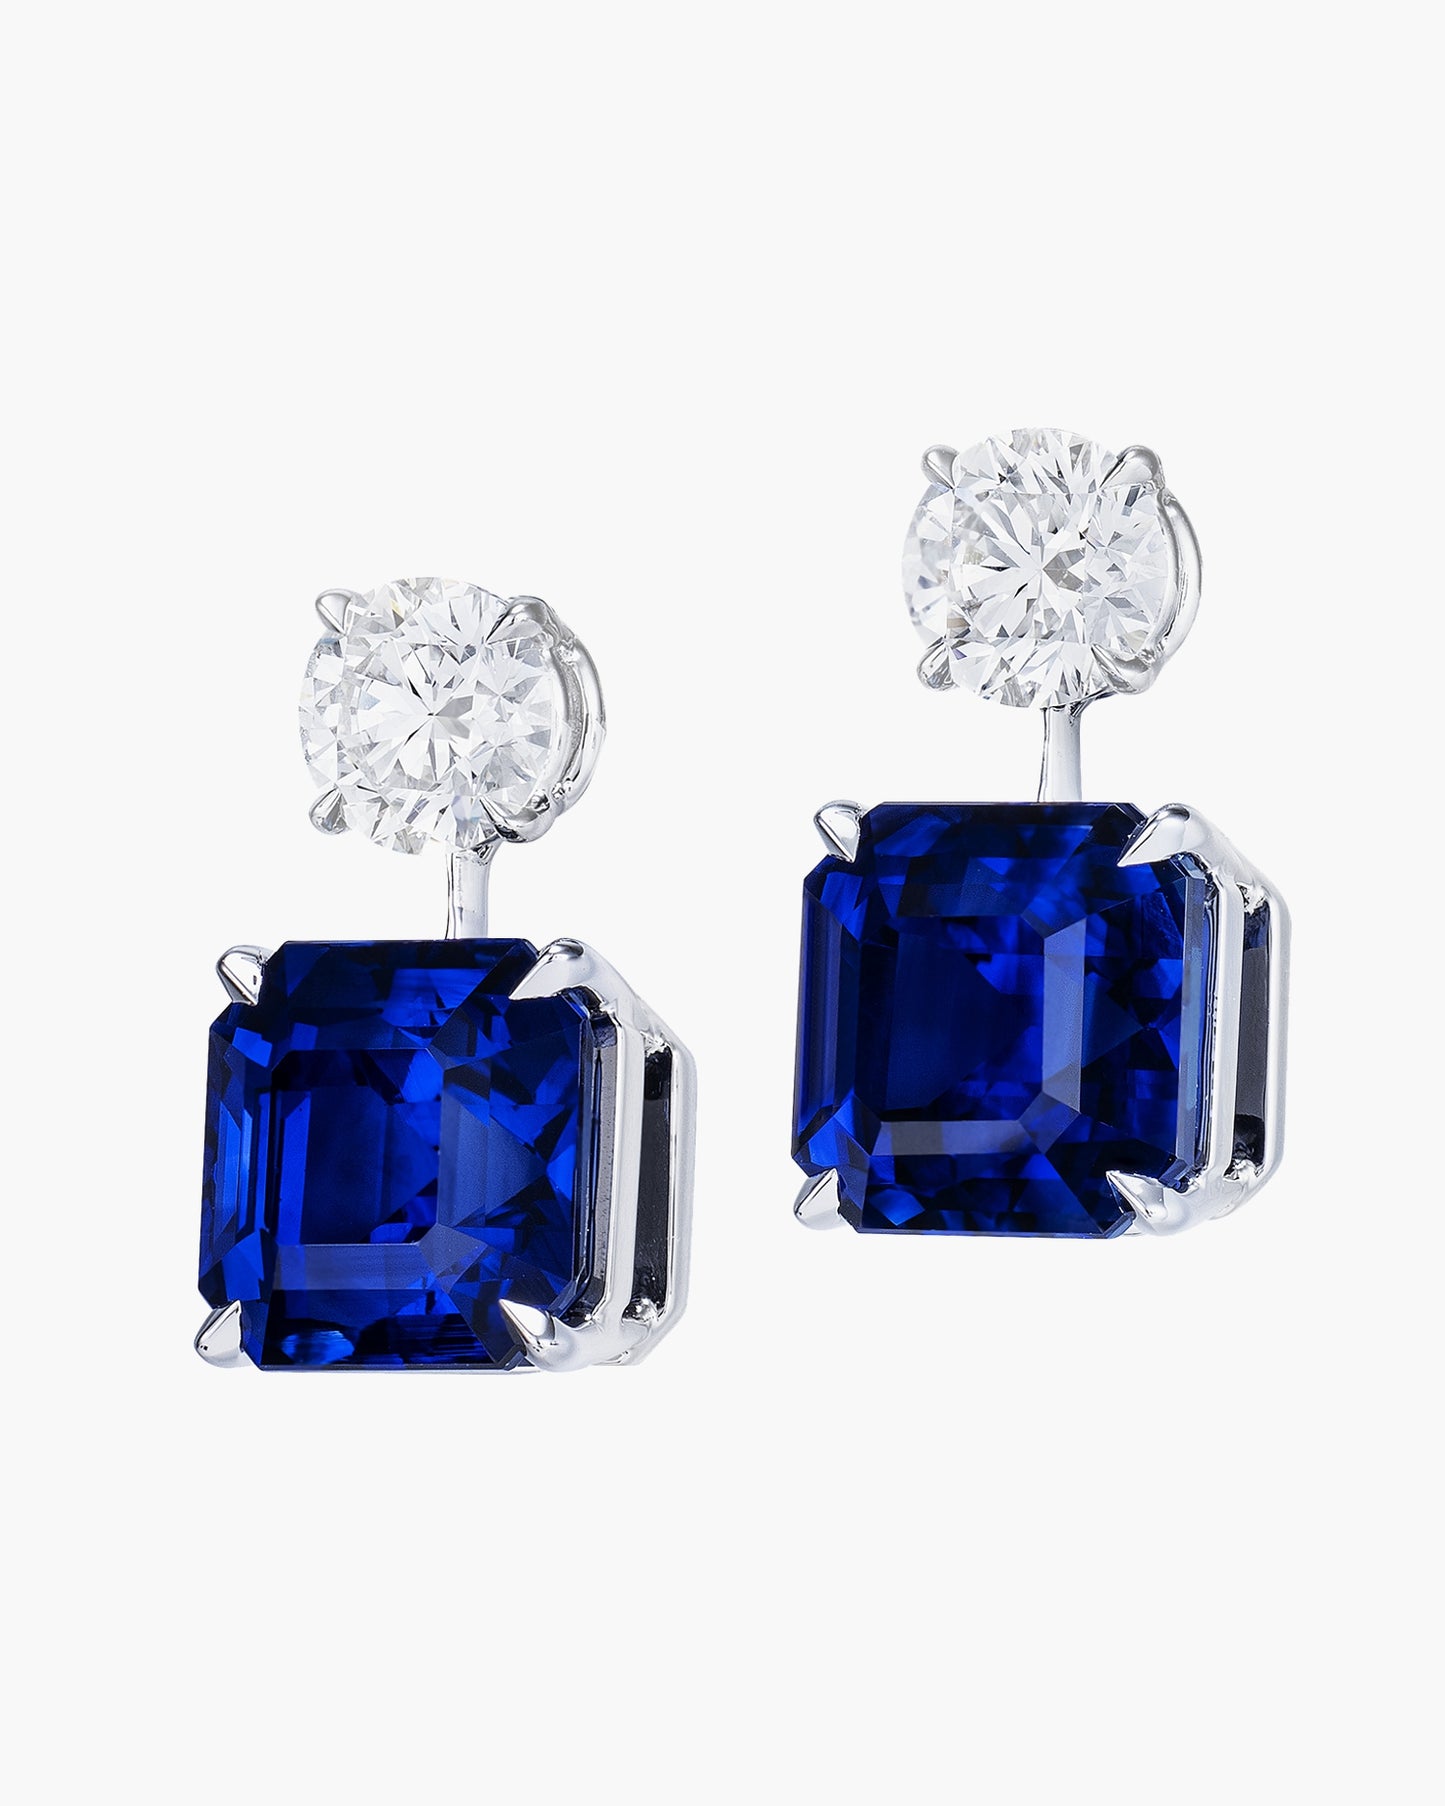 12.37 carat Emerald Cut Ceylon Sapphire and Diamond Earrings